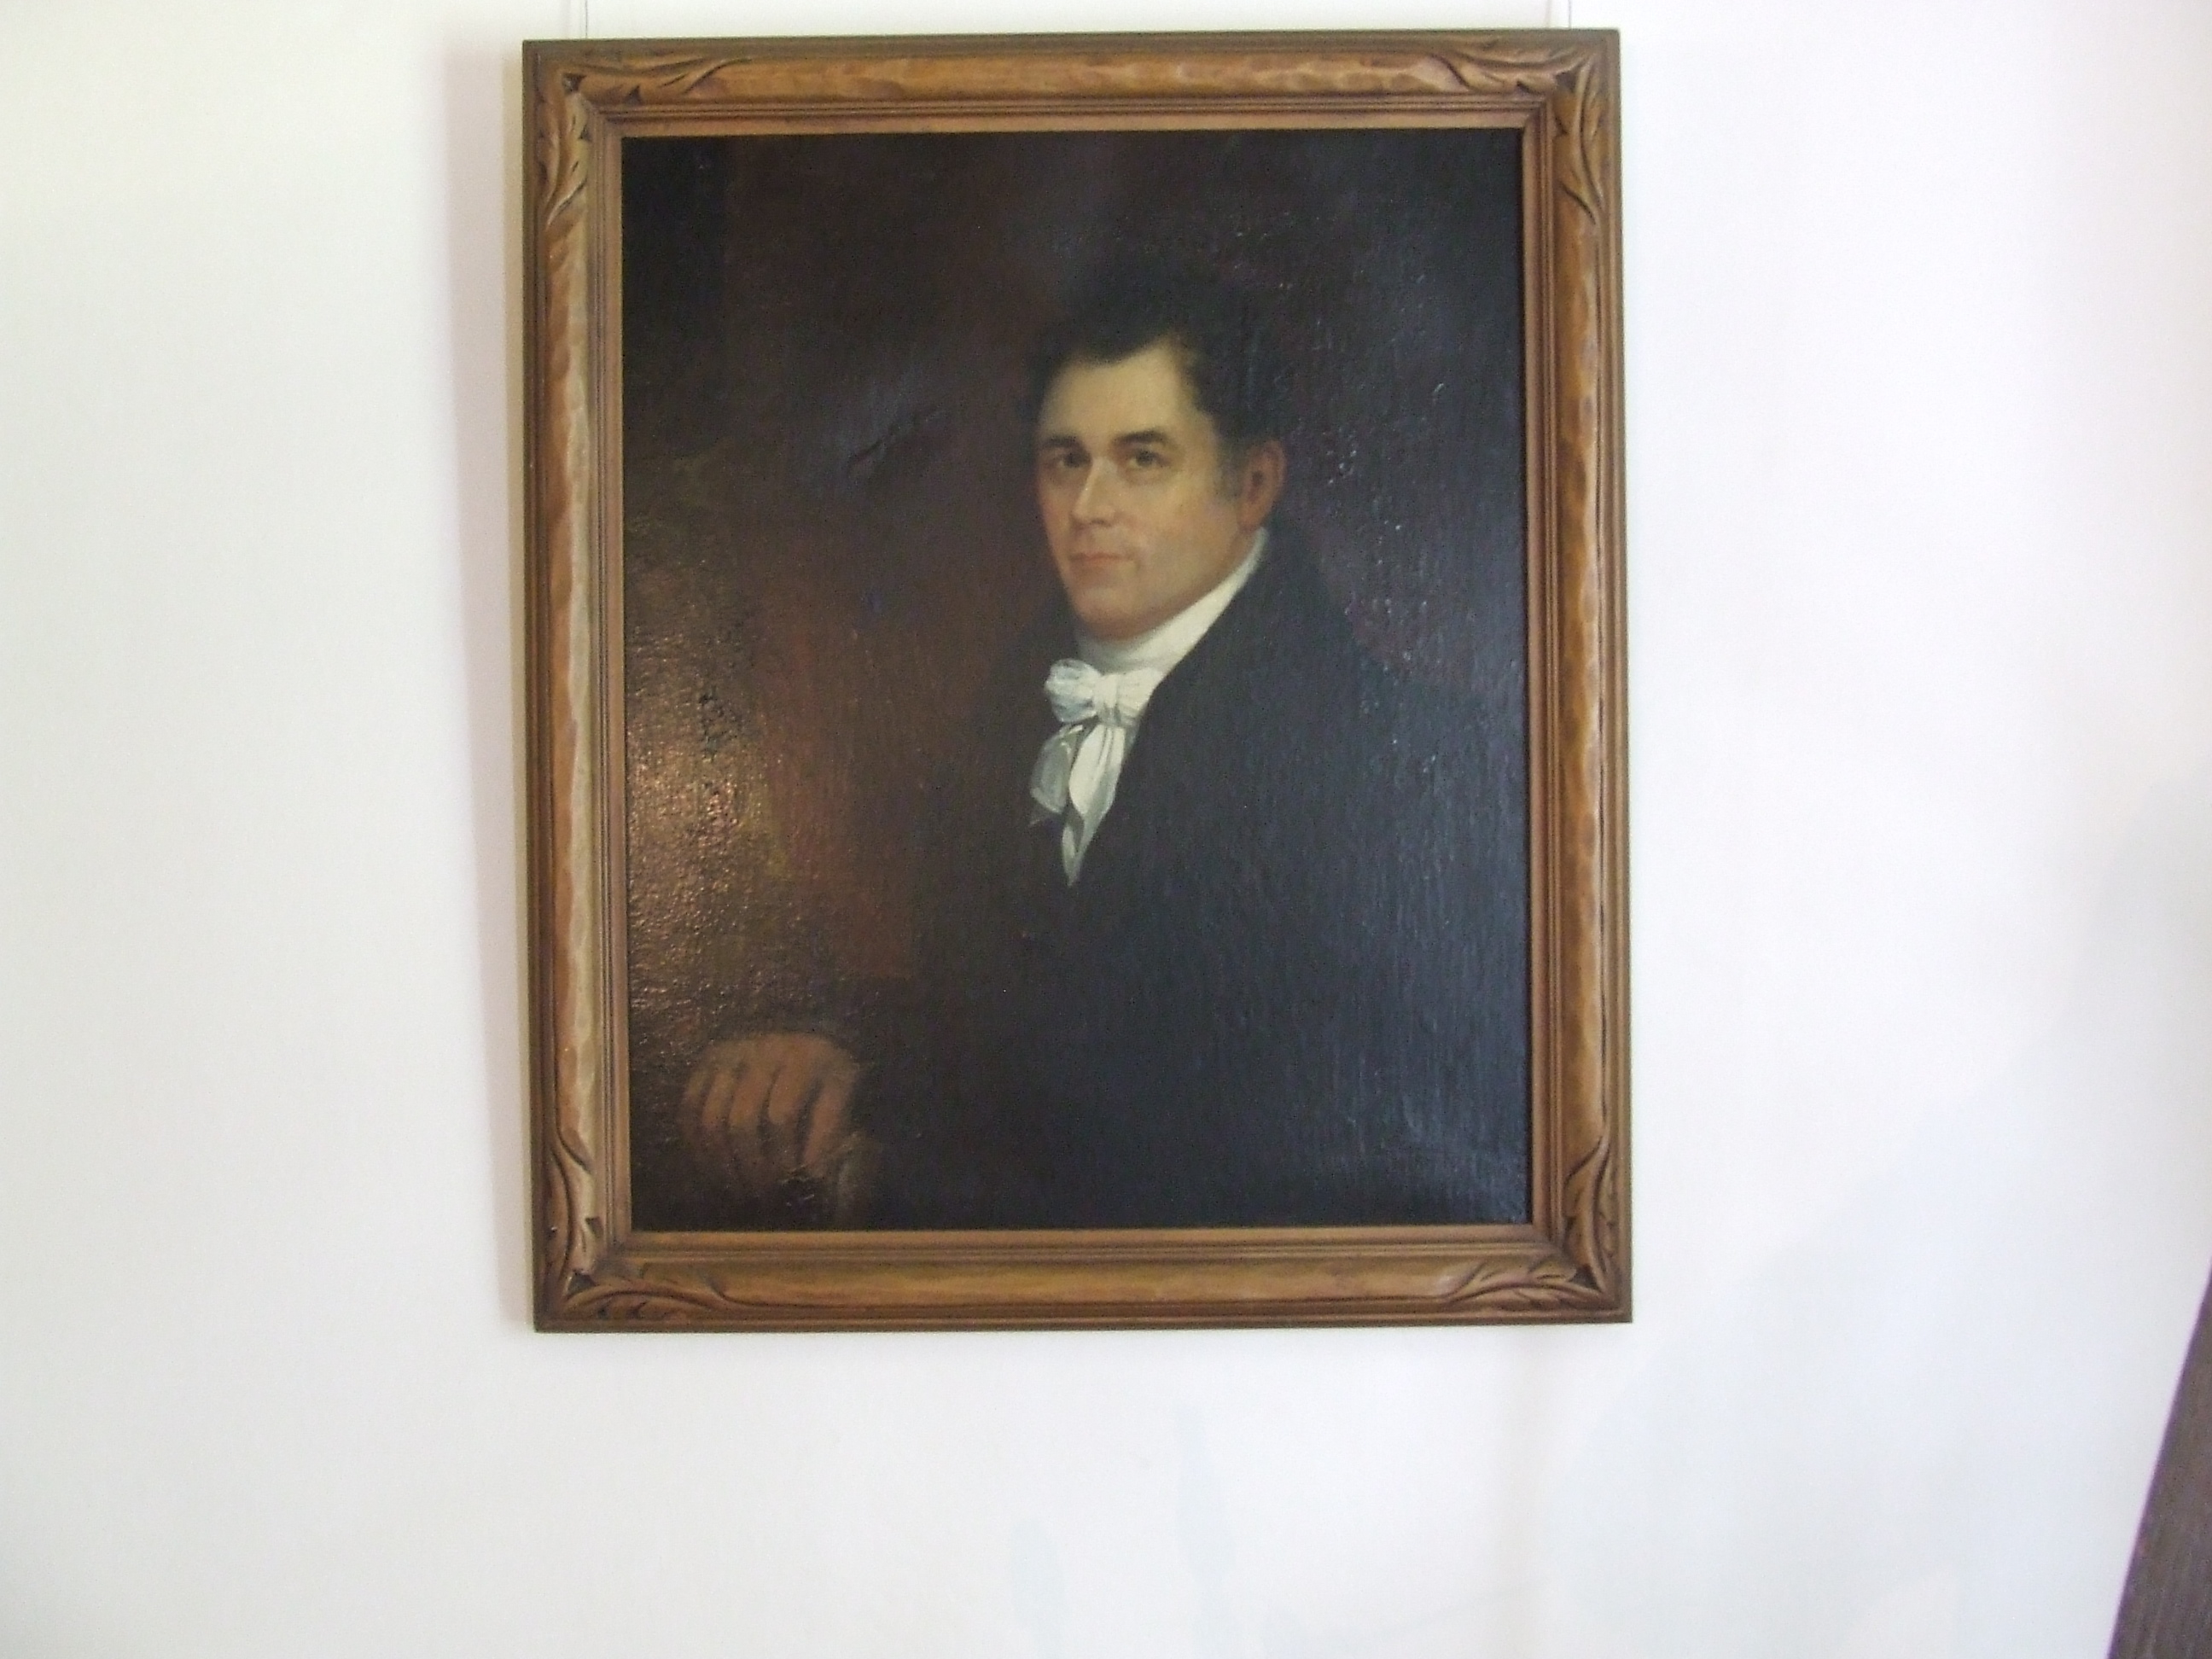 Local artist Paul Gould restored the portrait of David Sands.